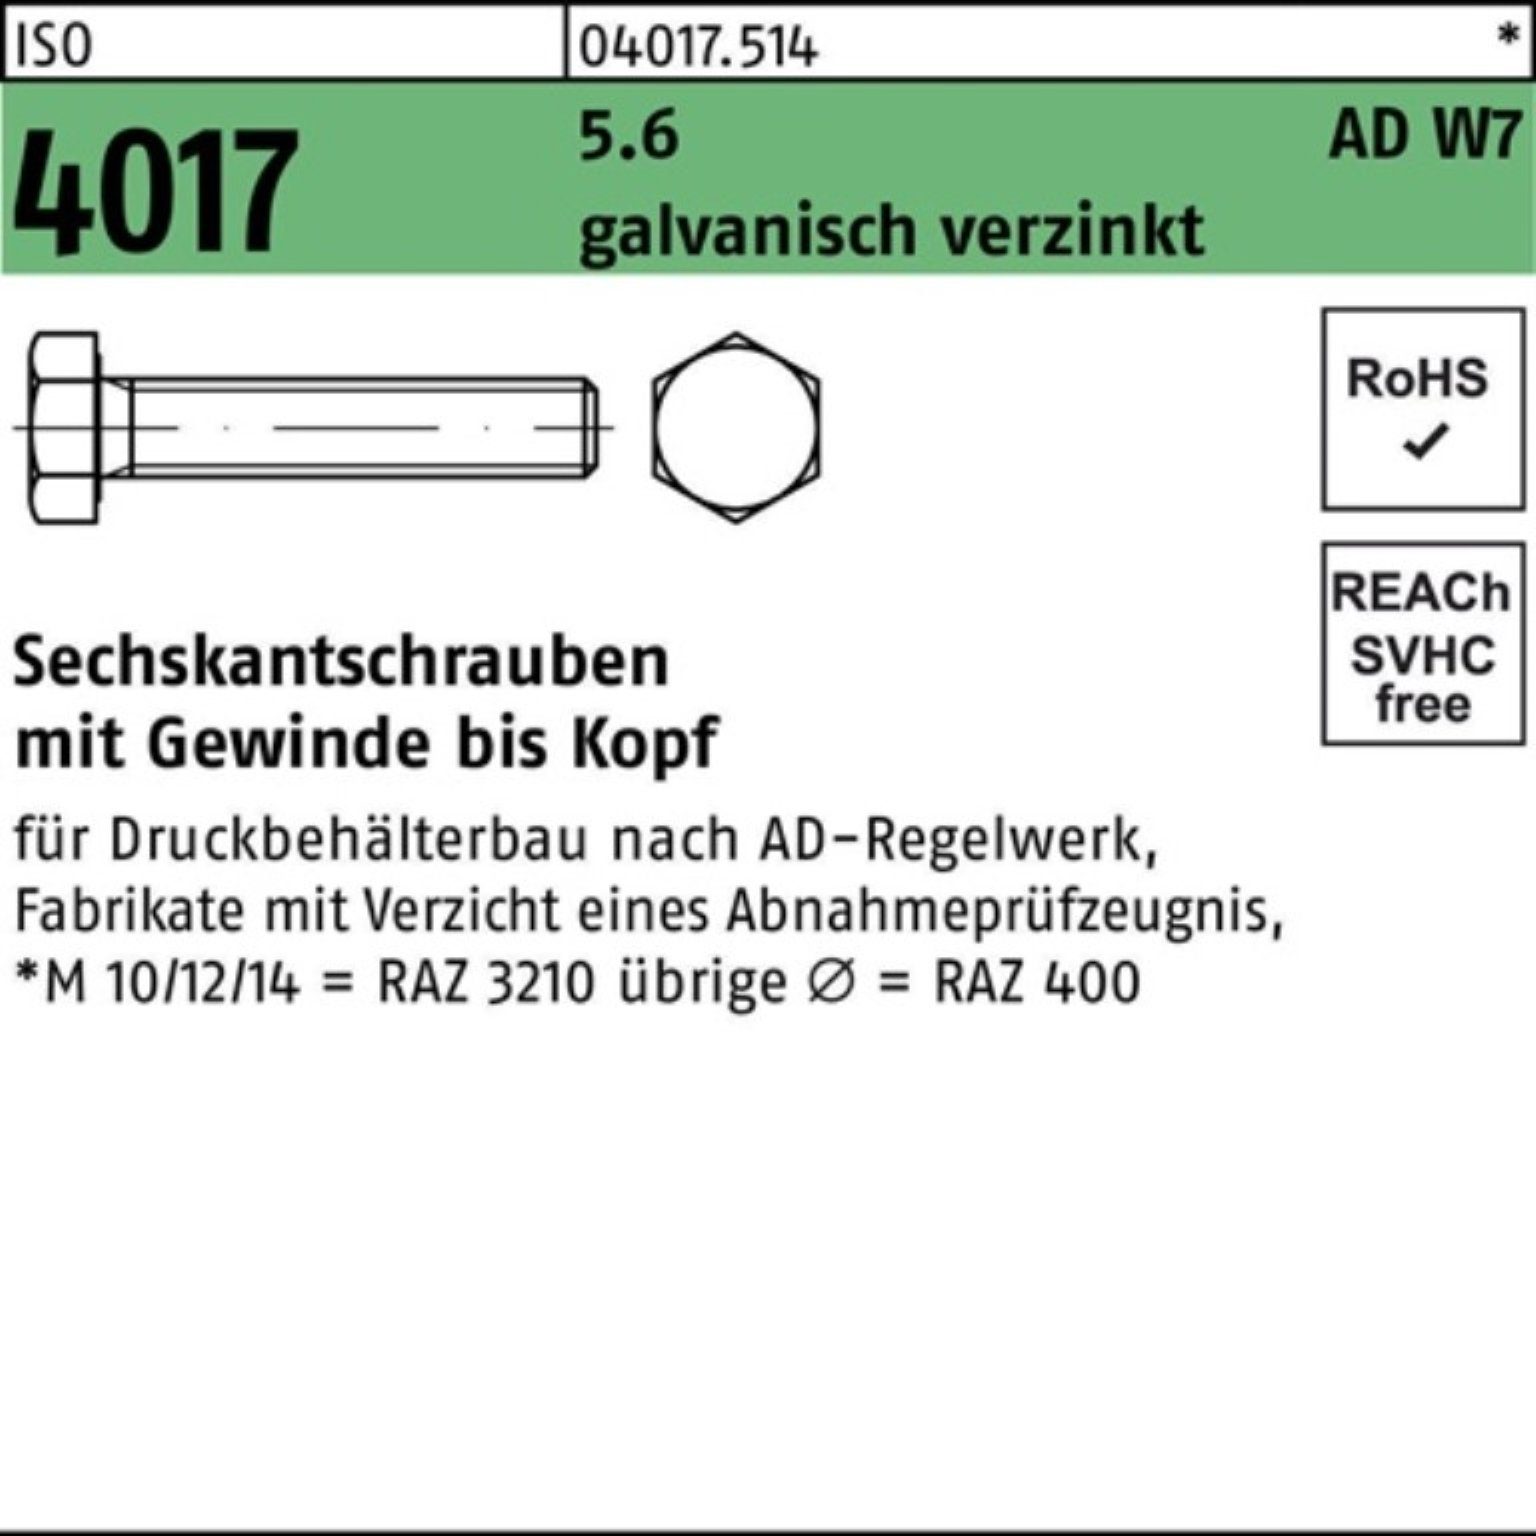 Bufab Sechskantschraube 100er M24x 75 W7 ISO VG 4017 5.6 galv.verz. AD Pack Sechskantschraube